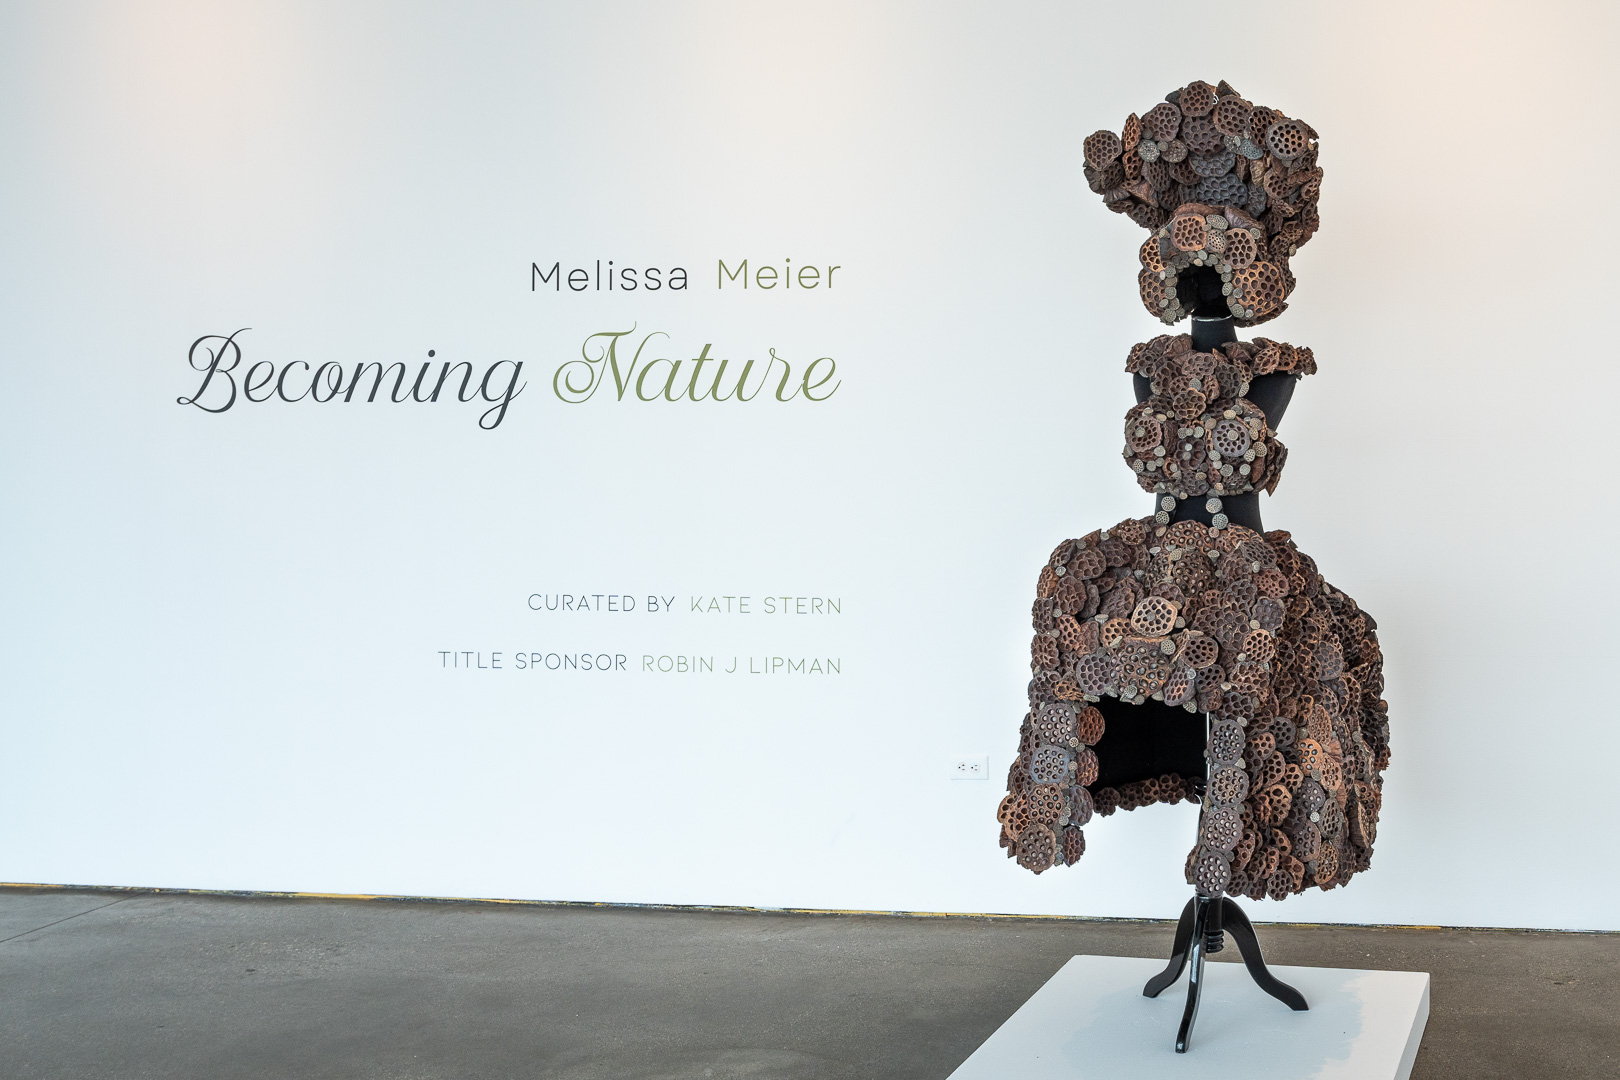 Melissa Meier: Becoming Nature, installed at Oceanside Museum of Art